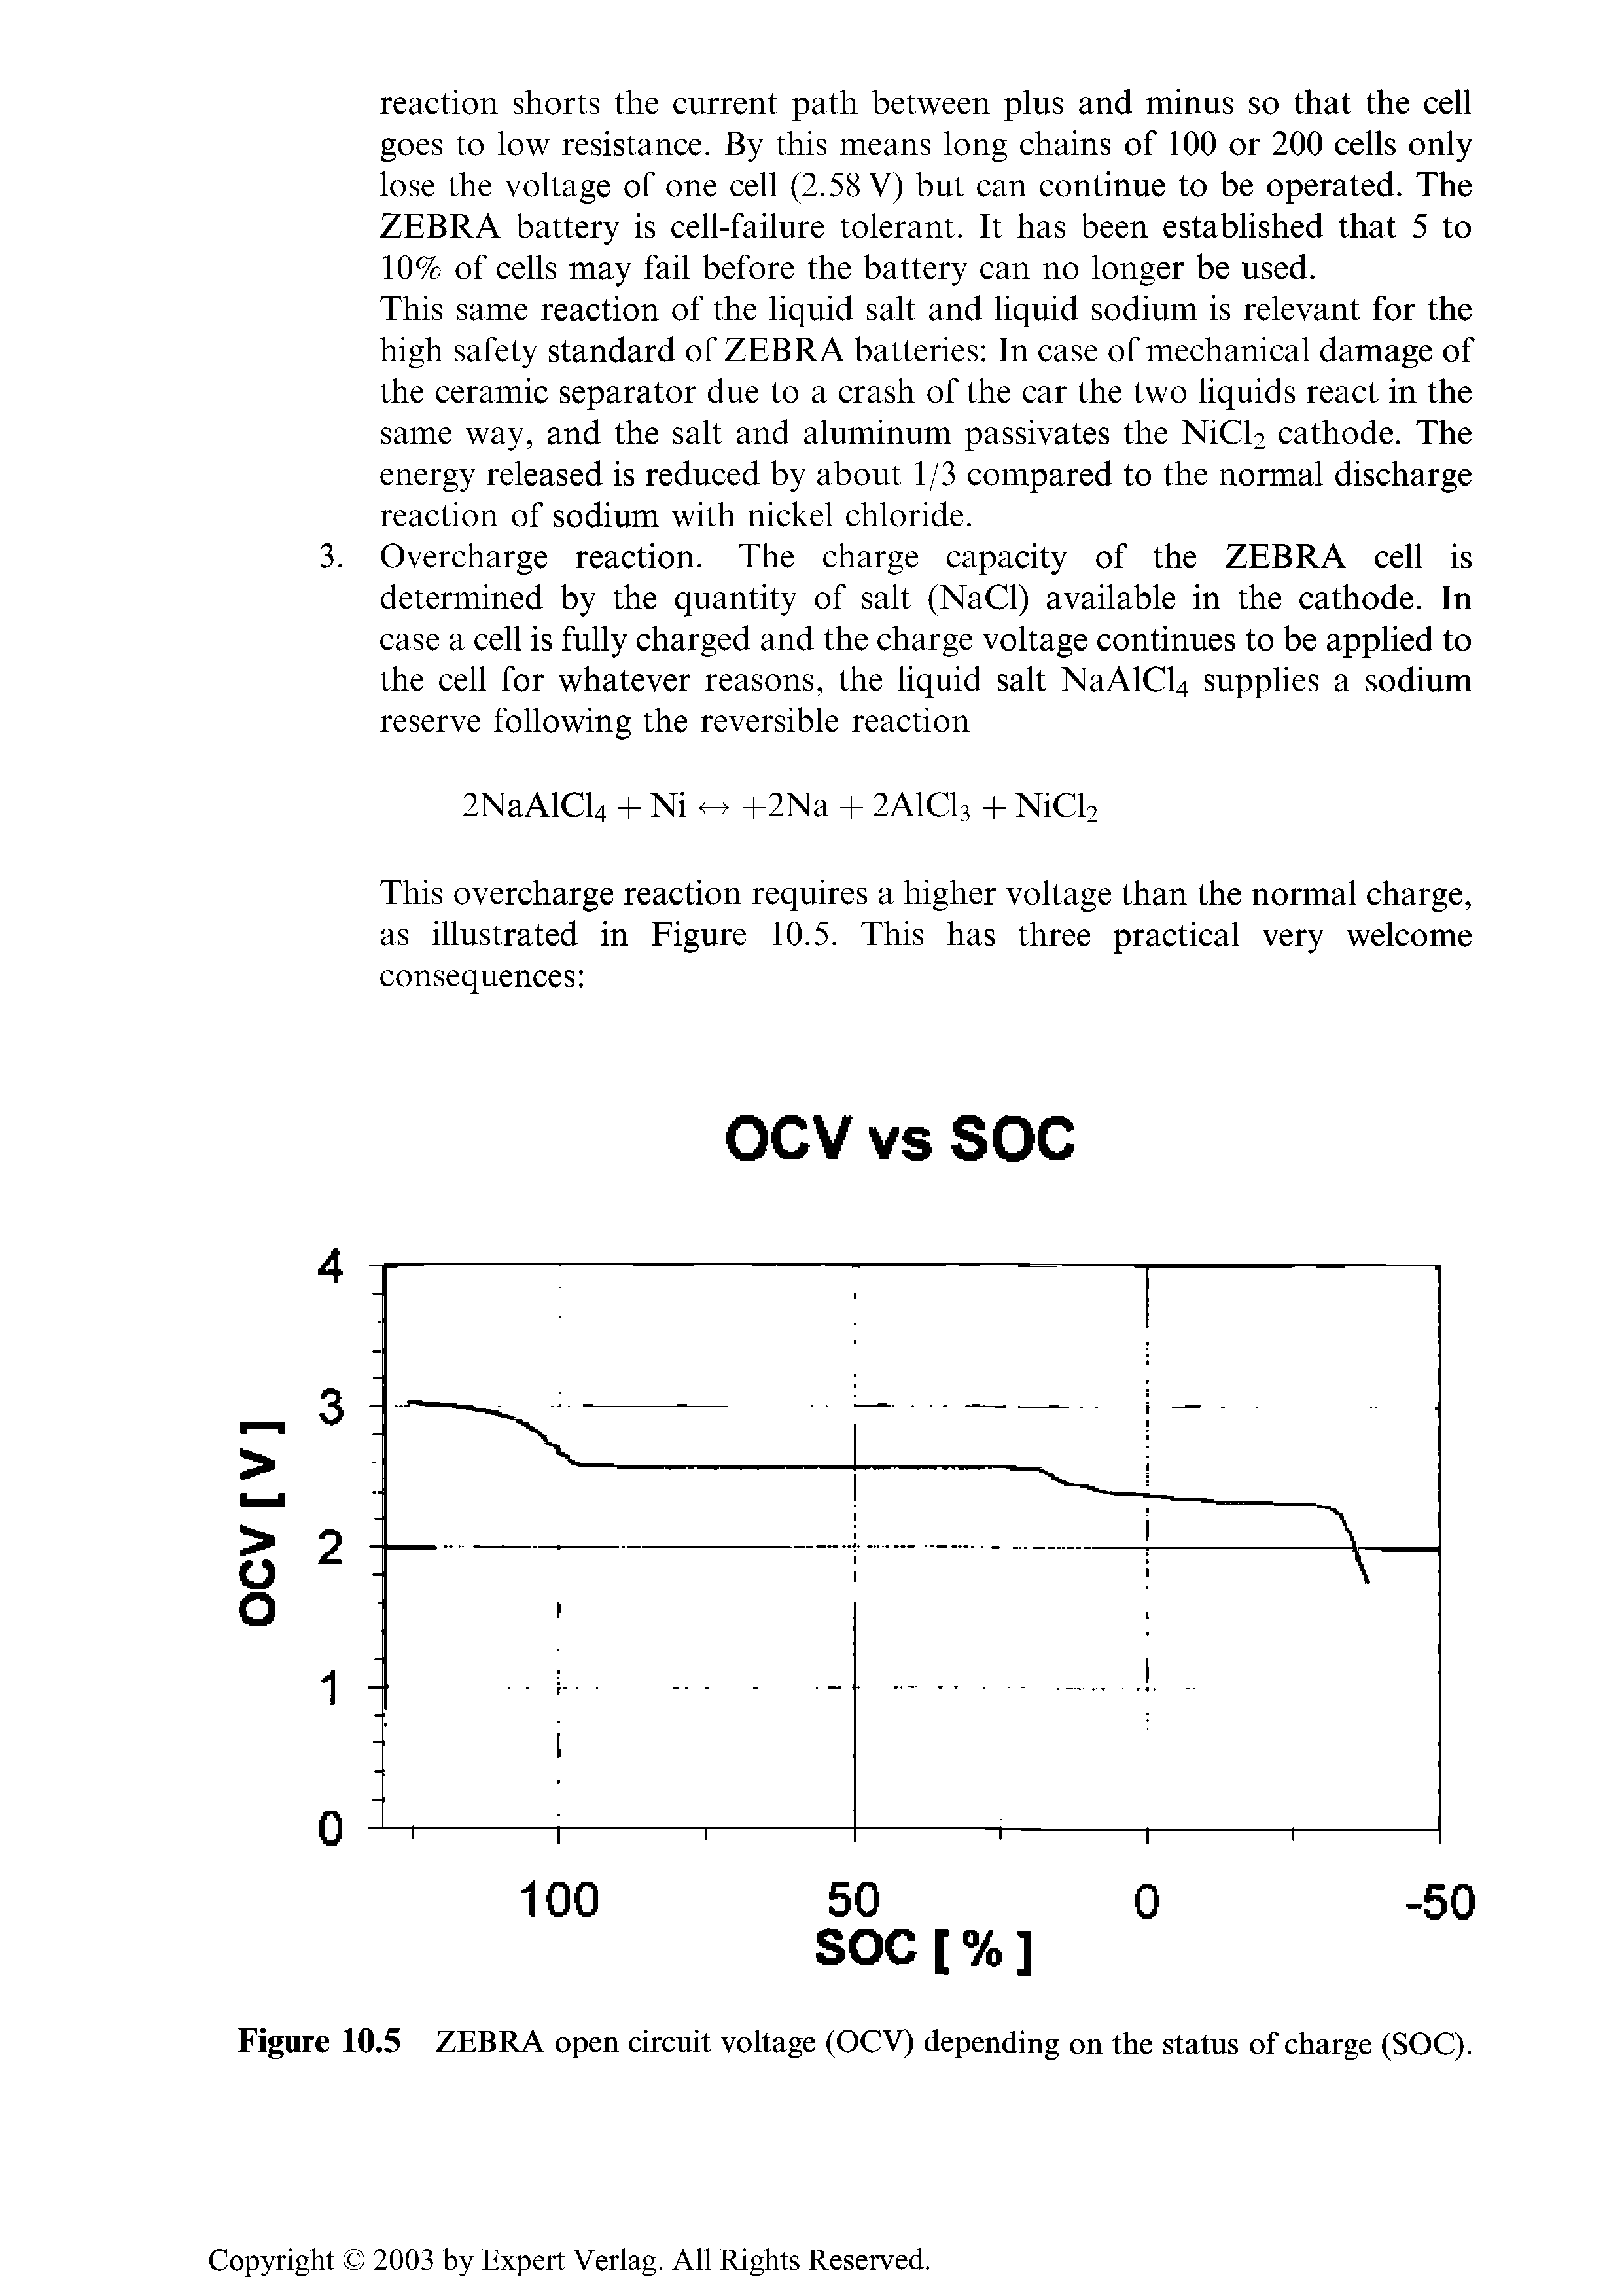 Figure 10.5 ZEBRA open circuit voltage (OCV) depending on the status of charge (SOC).